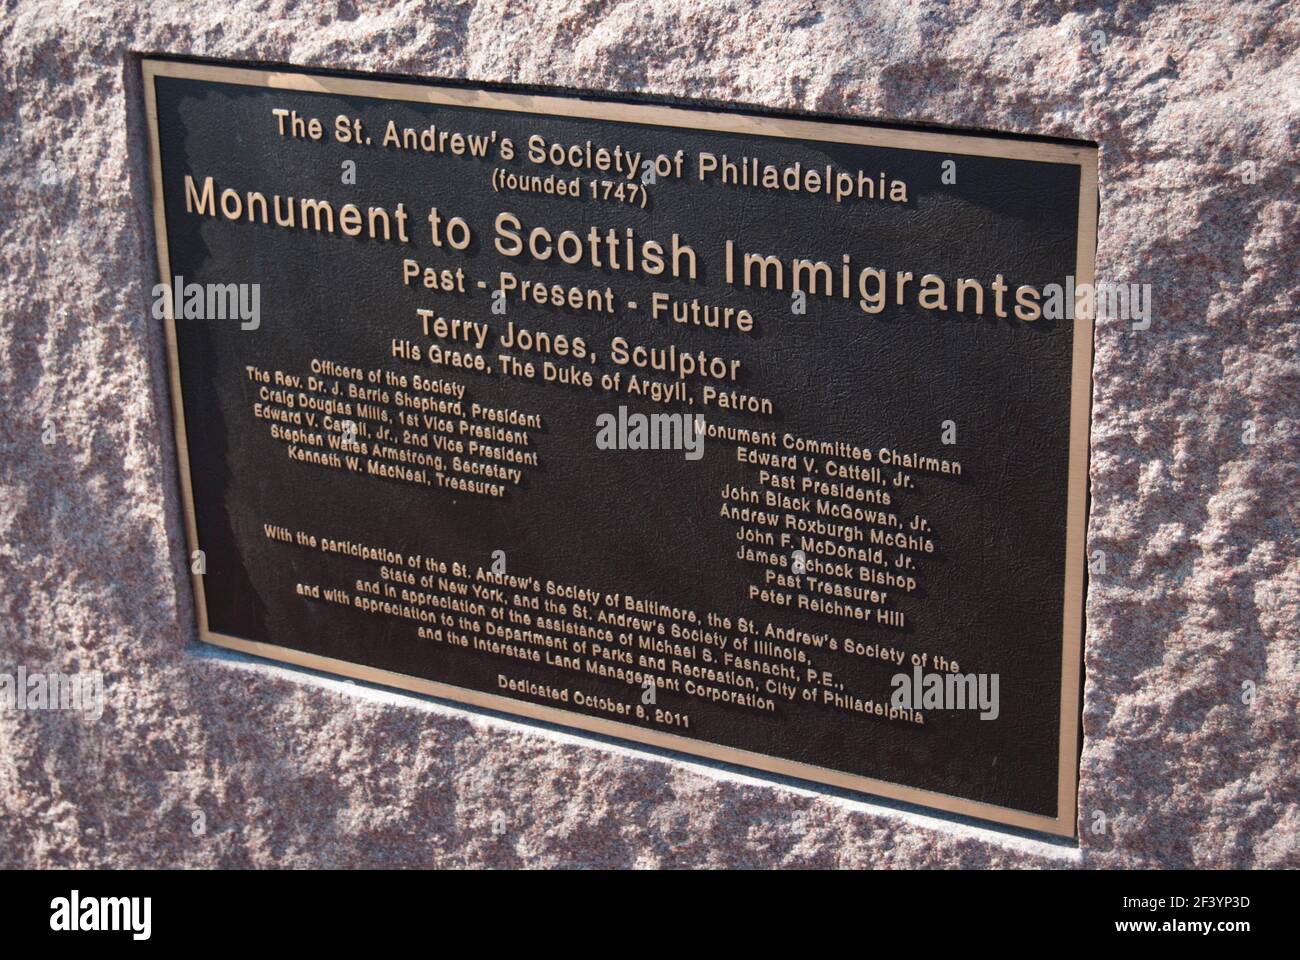 The Scottish Memorial in I-95 Park commemorating The Scottish immigrants, Philadelphia Pennsylvania Stock Photo